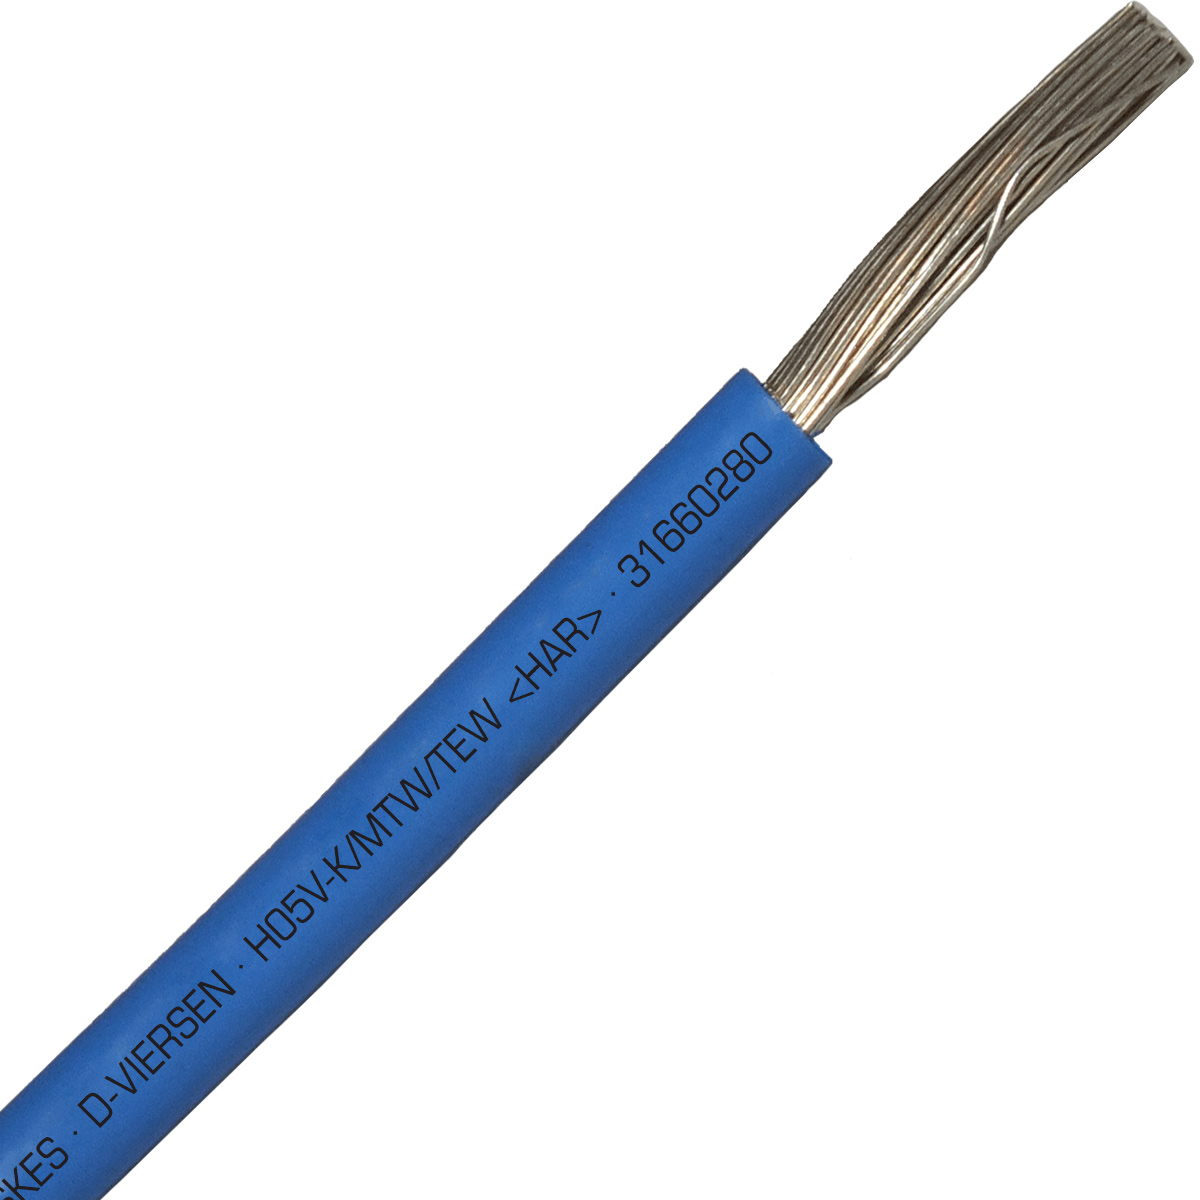 H05V-K <lt/>HAR<gt/> International Lead Wire, 1.0MM2, 300V/500V, PVC Insulated, Blue